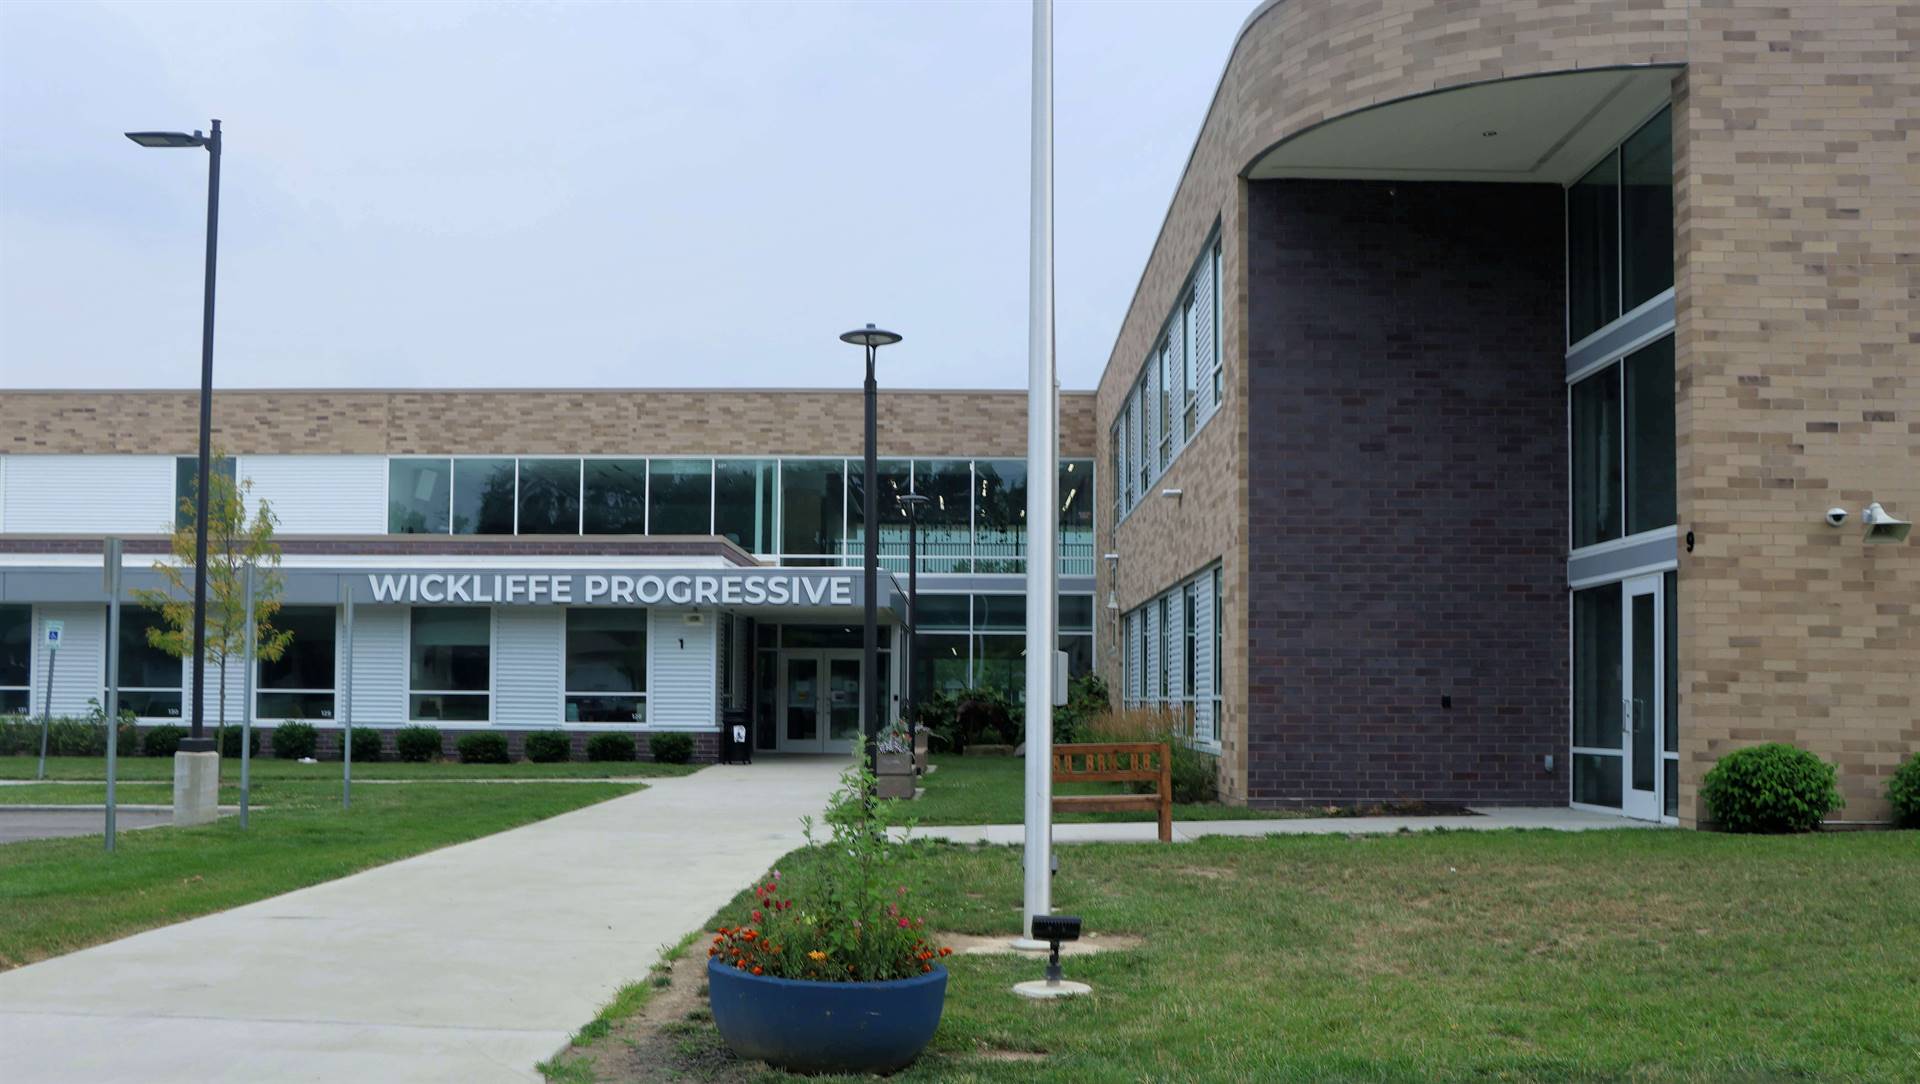 The new Wickliffe Progressive Elementary School